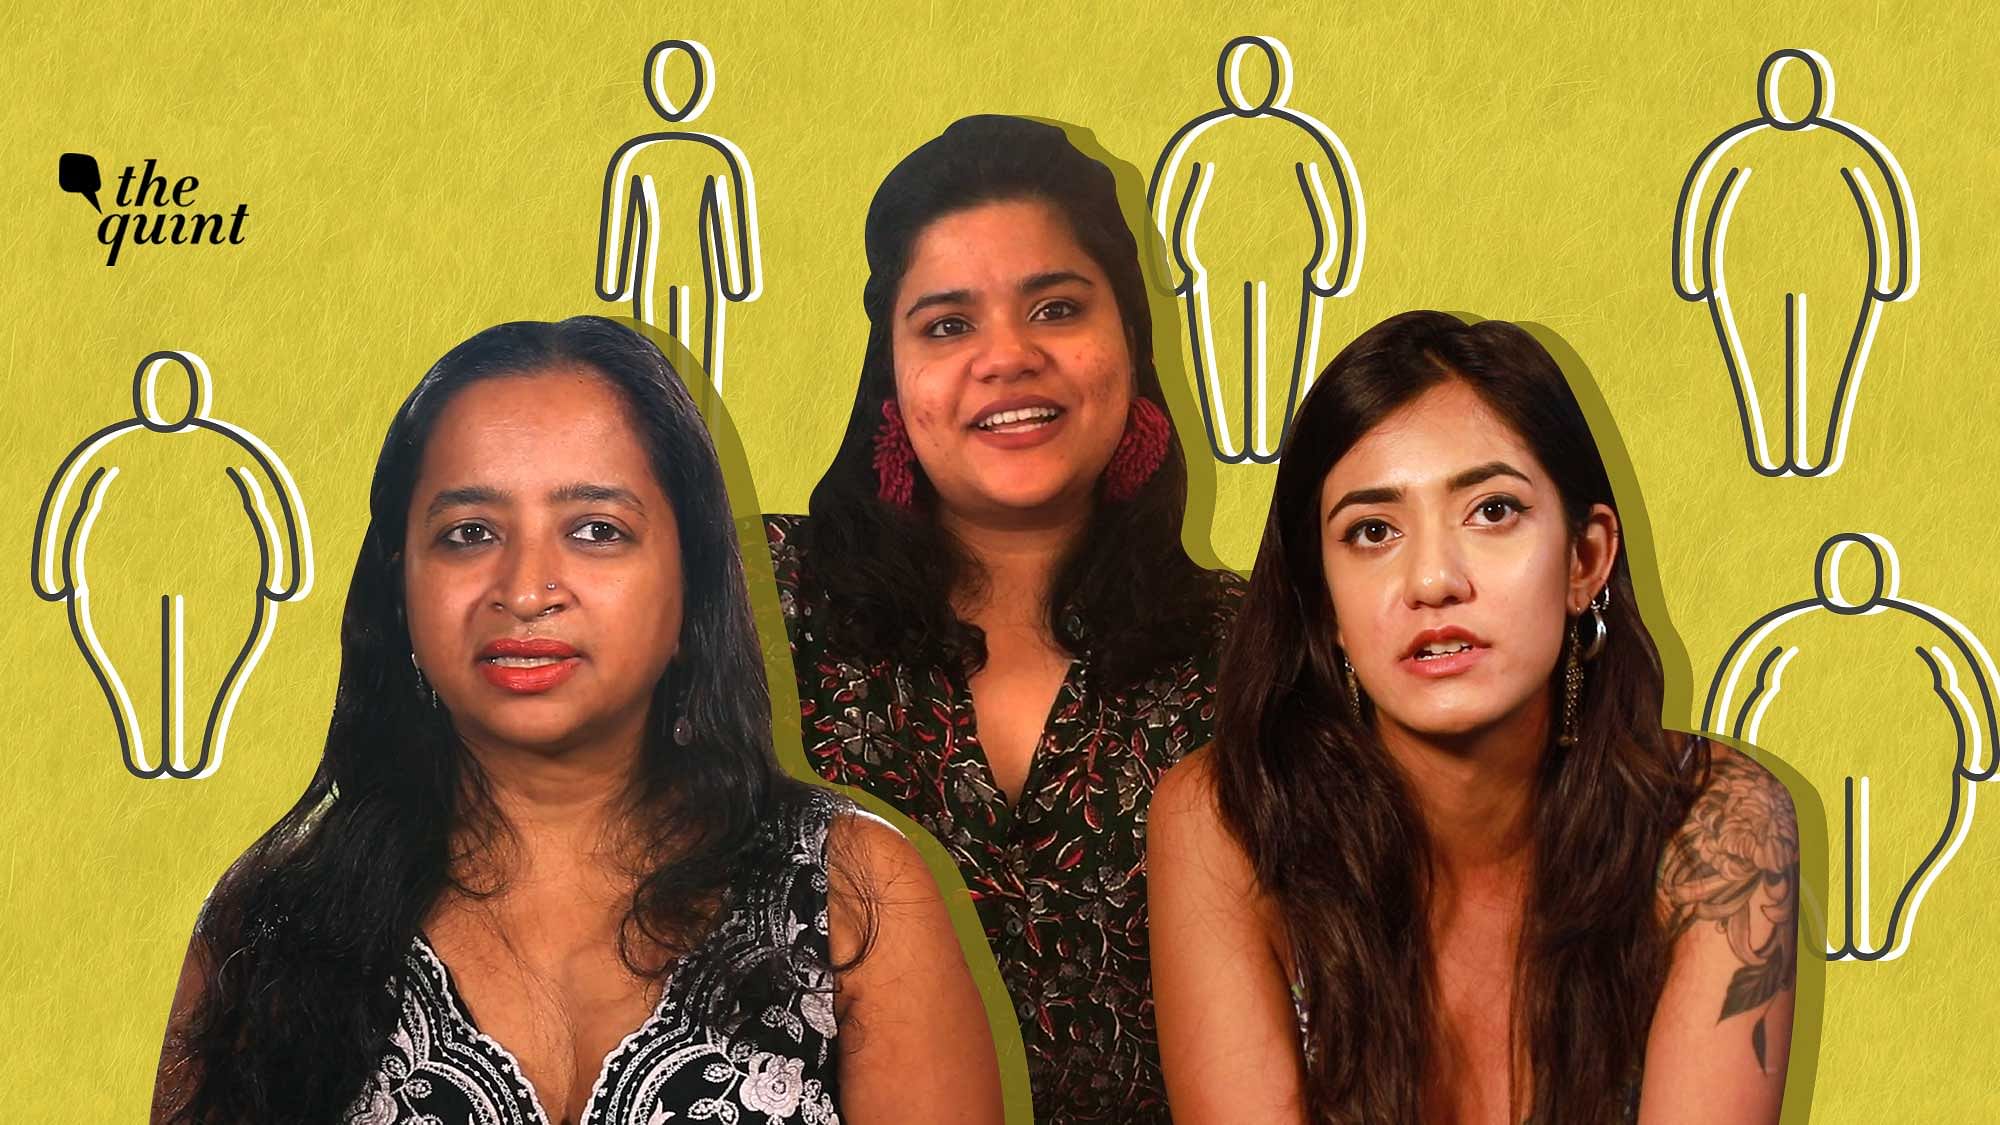 Meet three women illustrators who are leading India’s body positivity movement on Instagram.